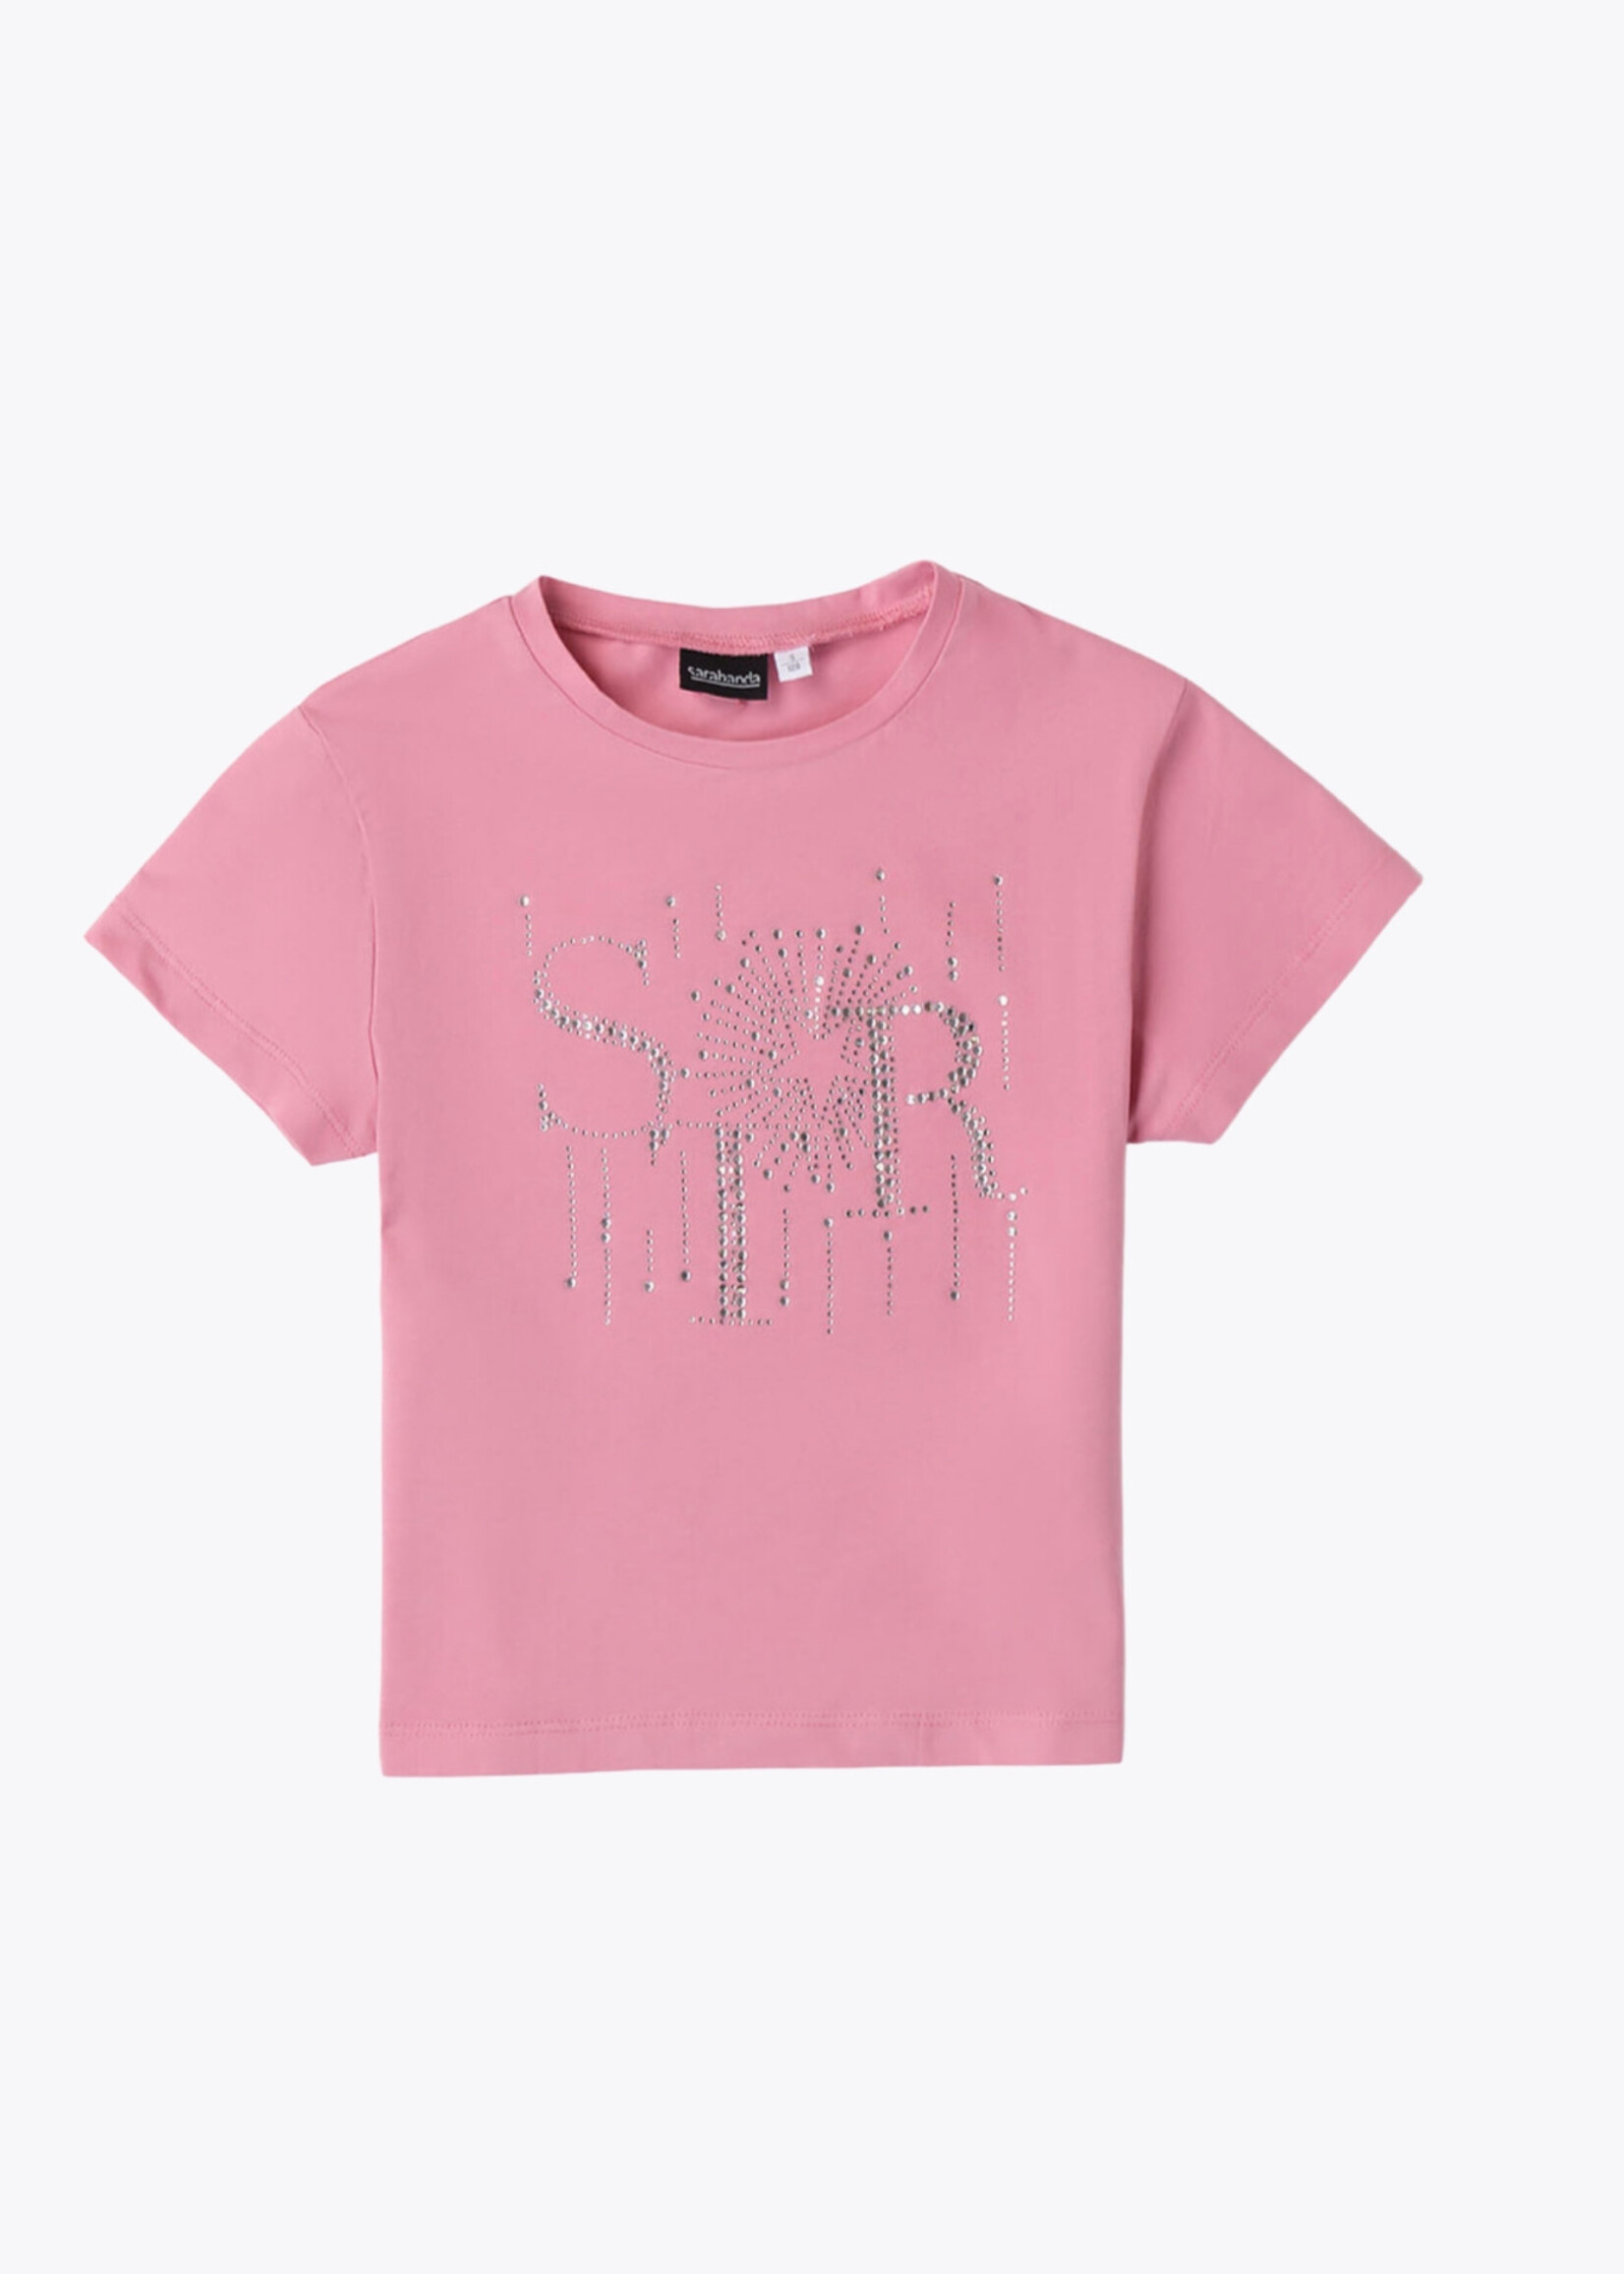 Sarabanda T-shirt en rose aves logo de Sarabanda en Strass.